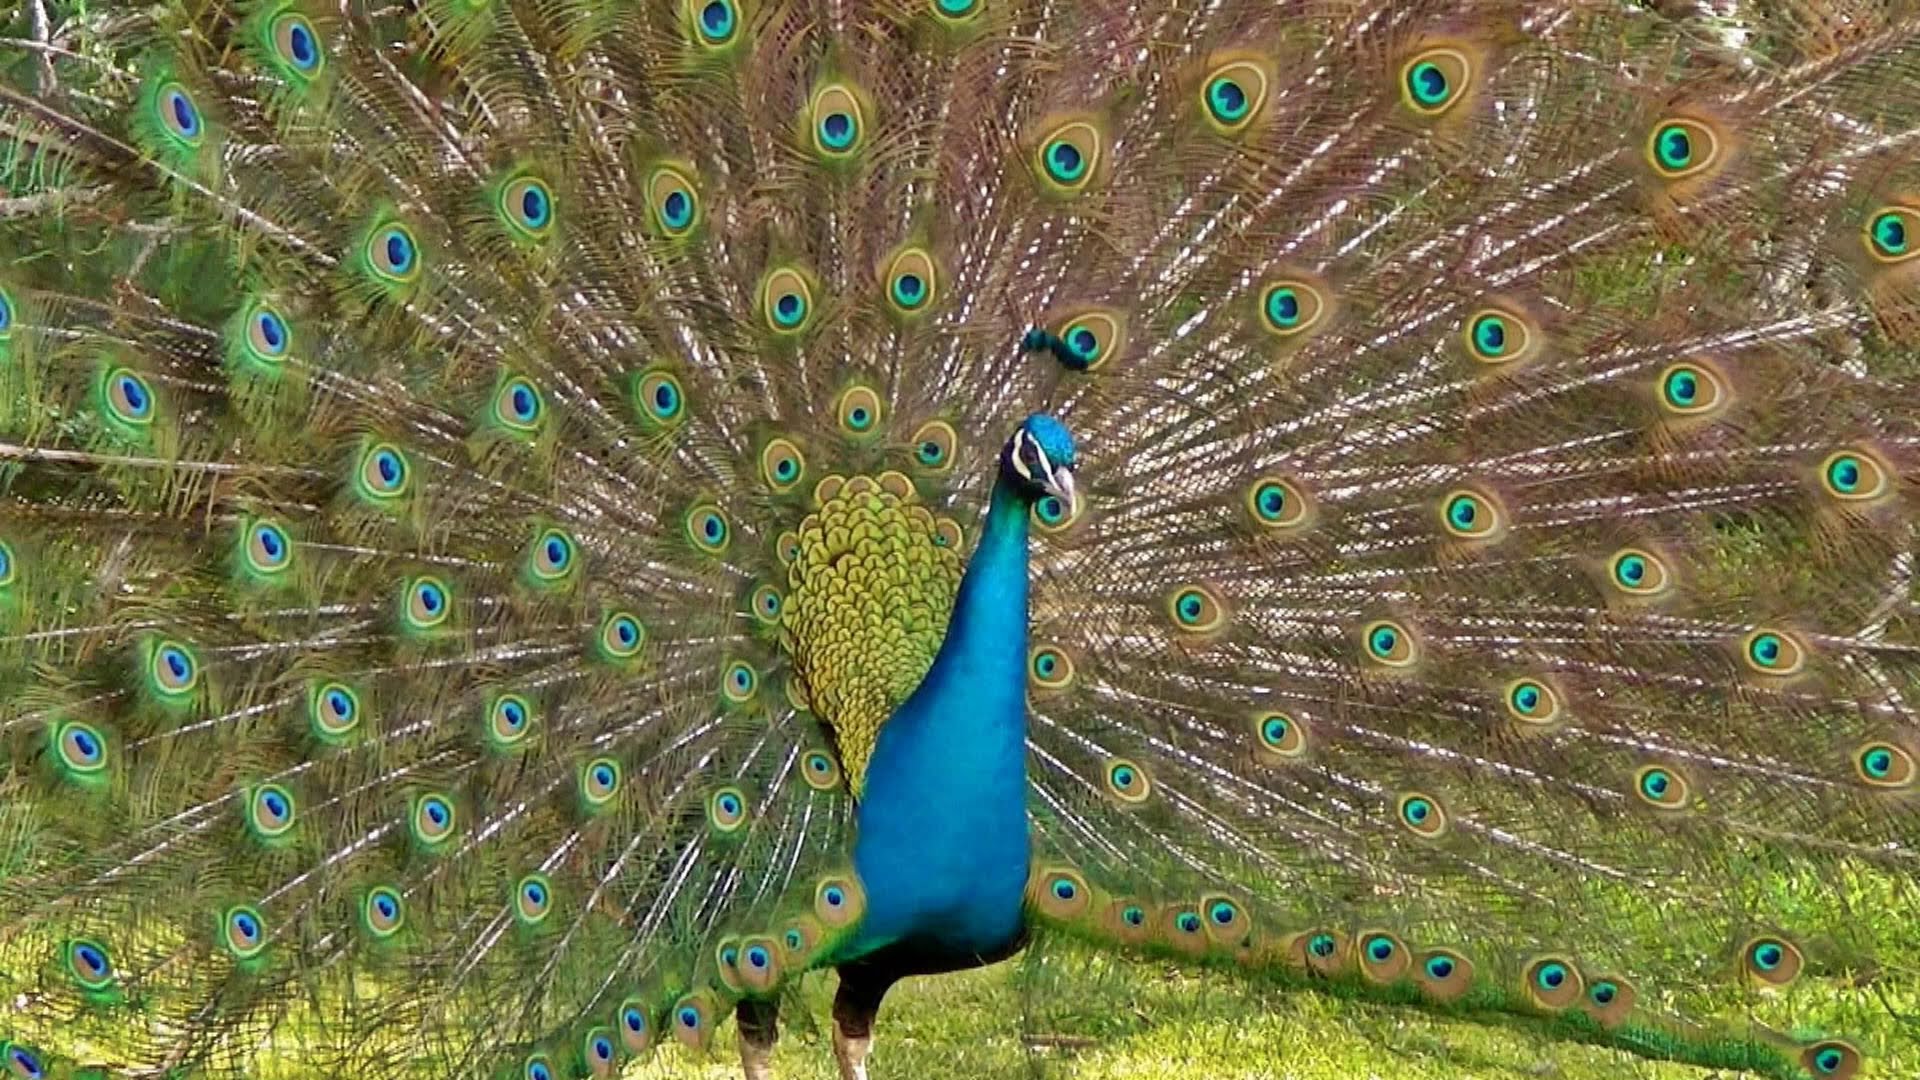 High Resolution Wallpaper | Peacock 1920x1080 px